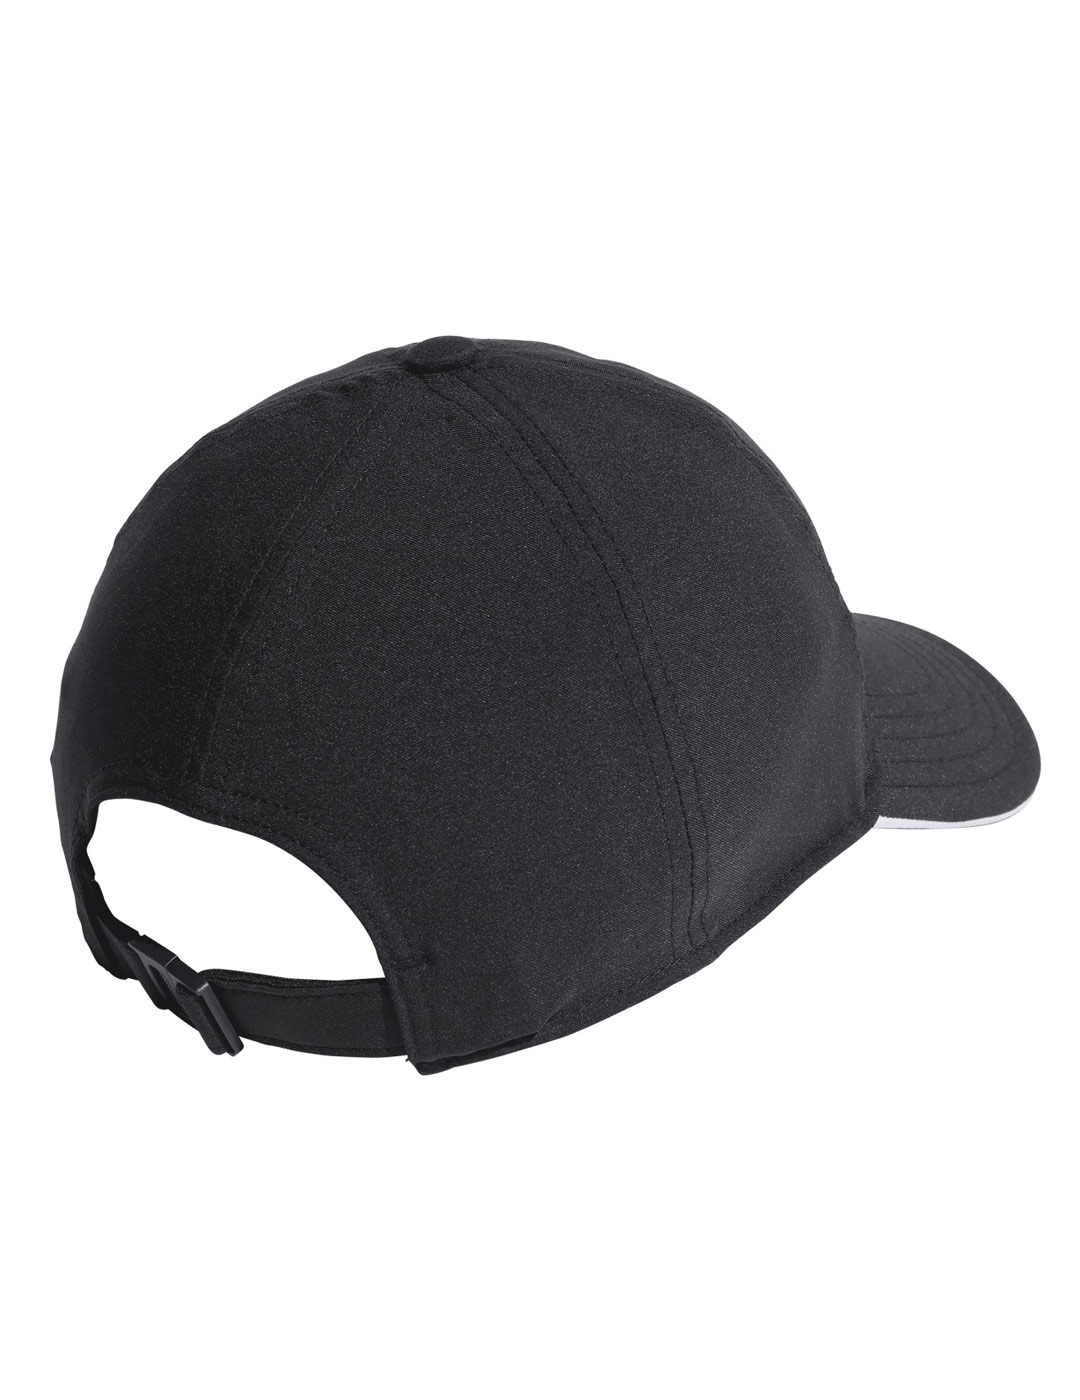 gorra adidas BALLCAP, negro/blanco